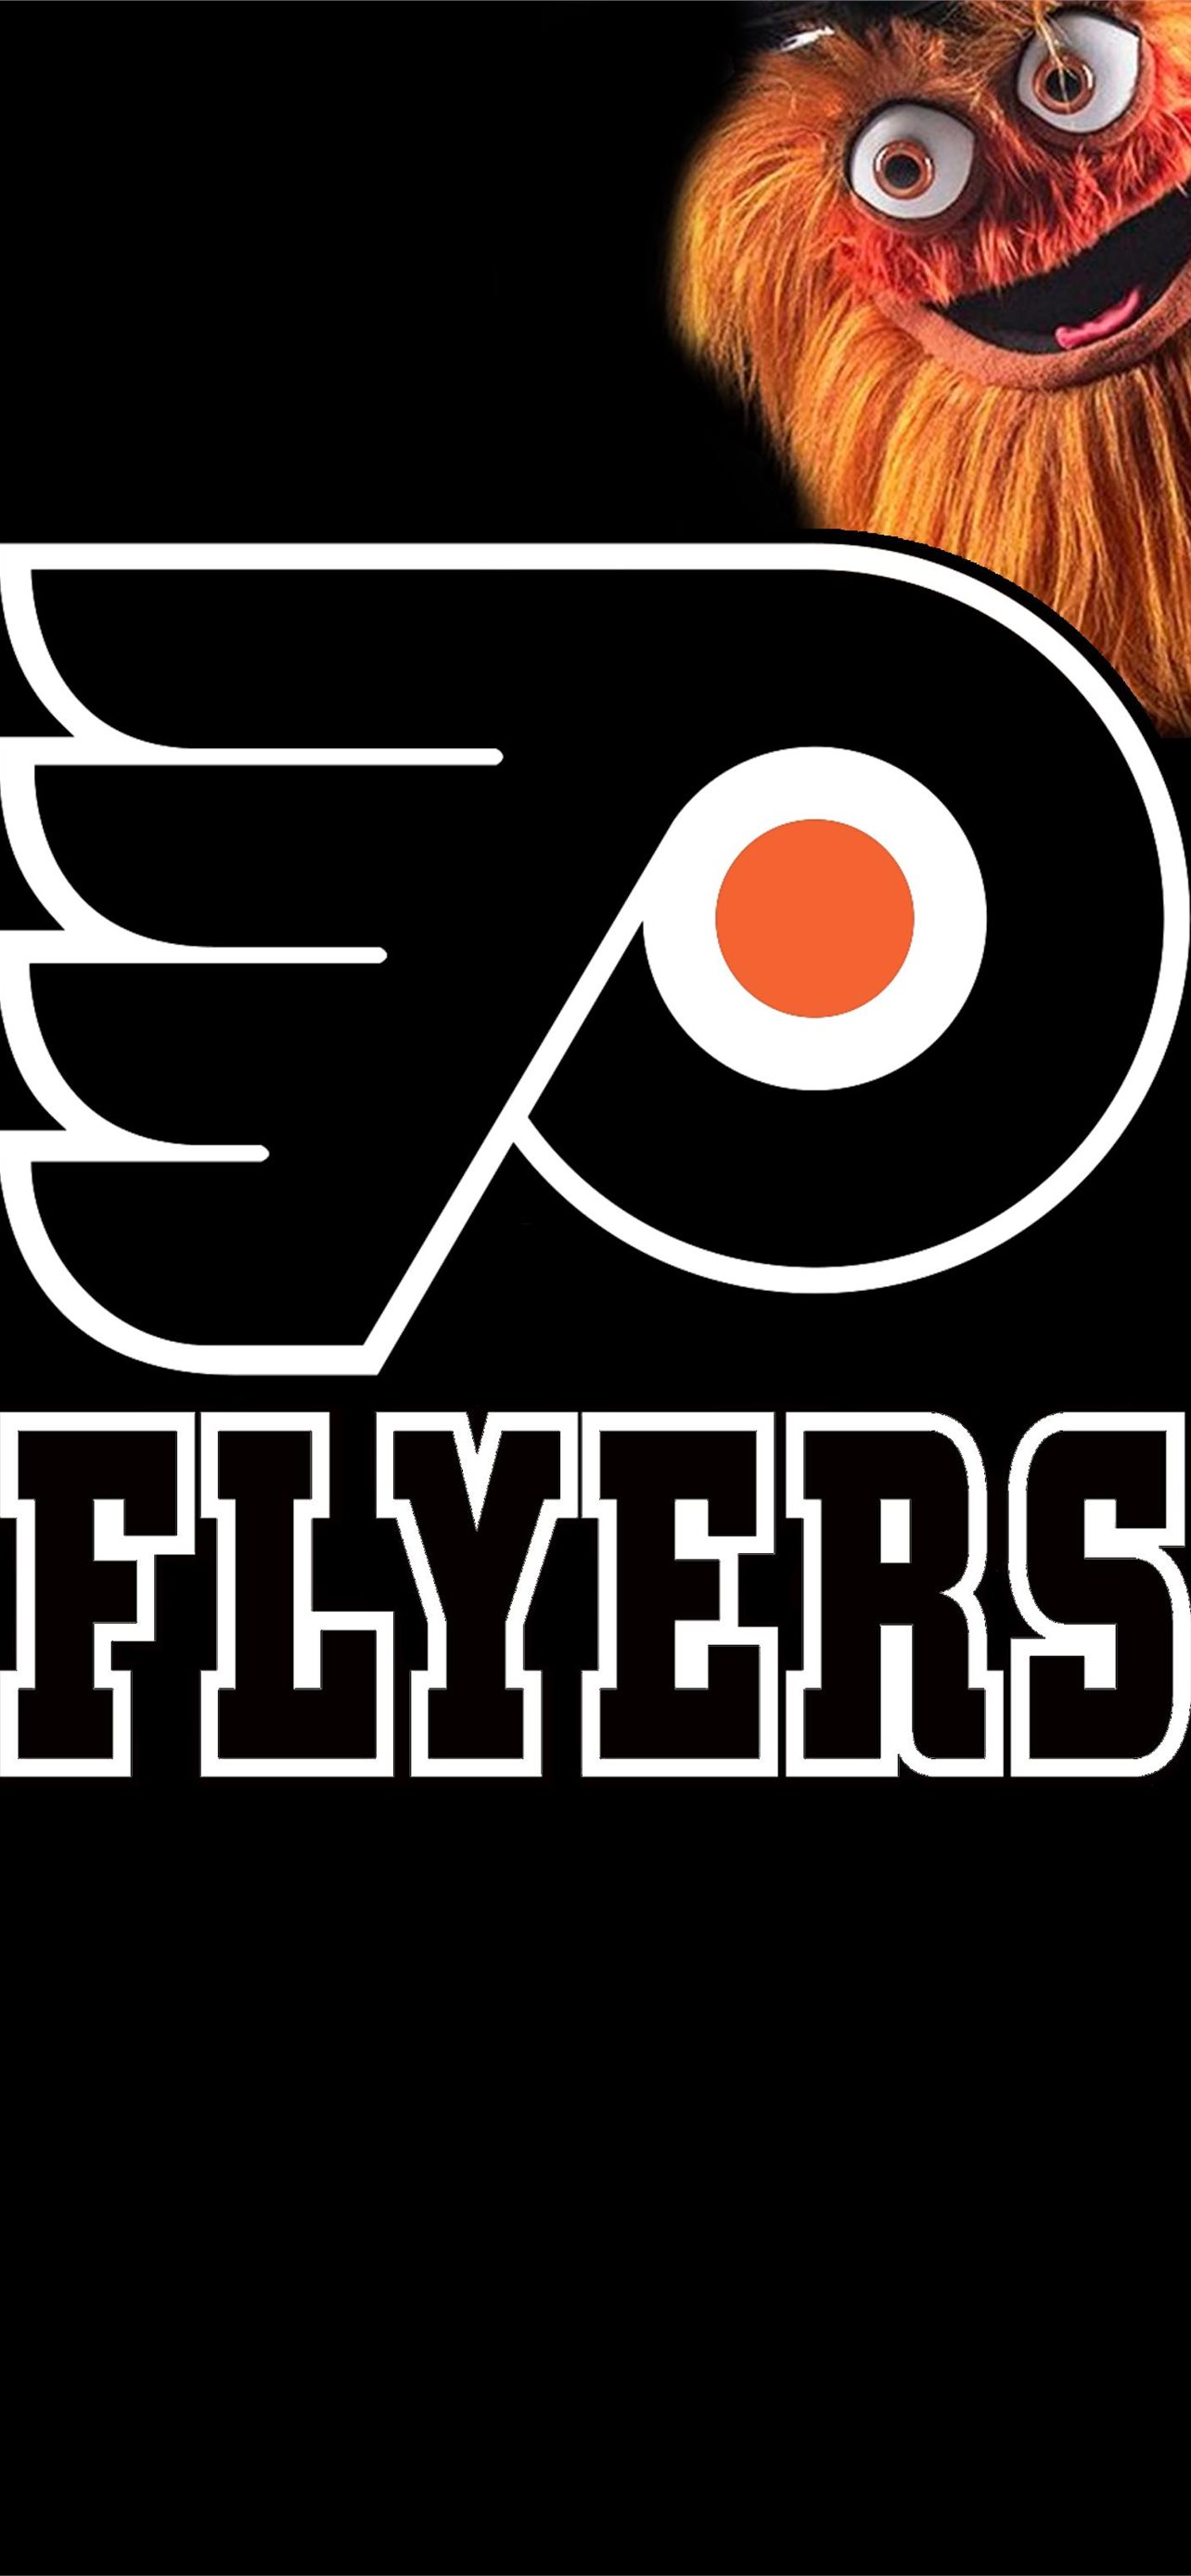 Philadelphia Flyers Wallpapers